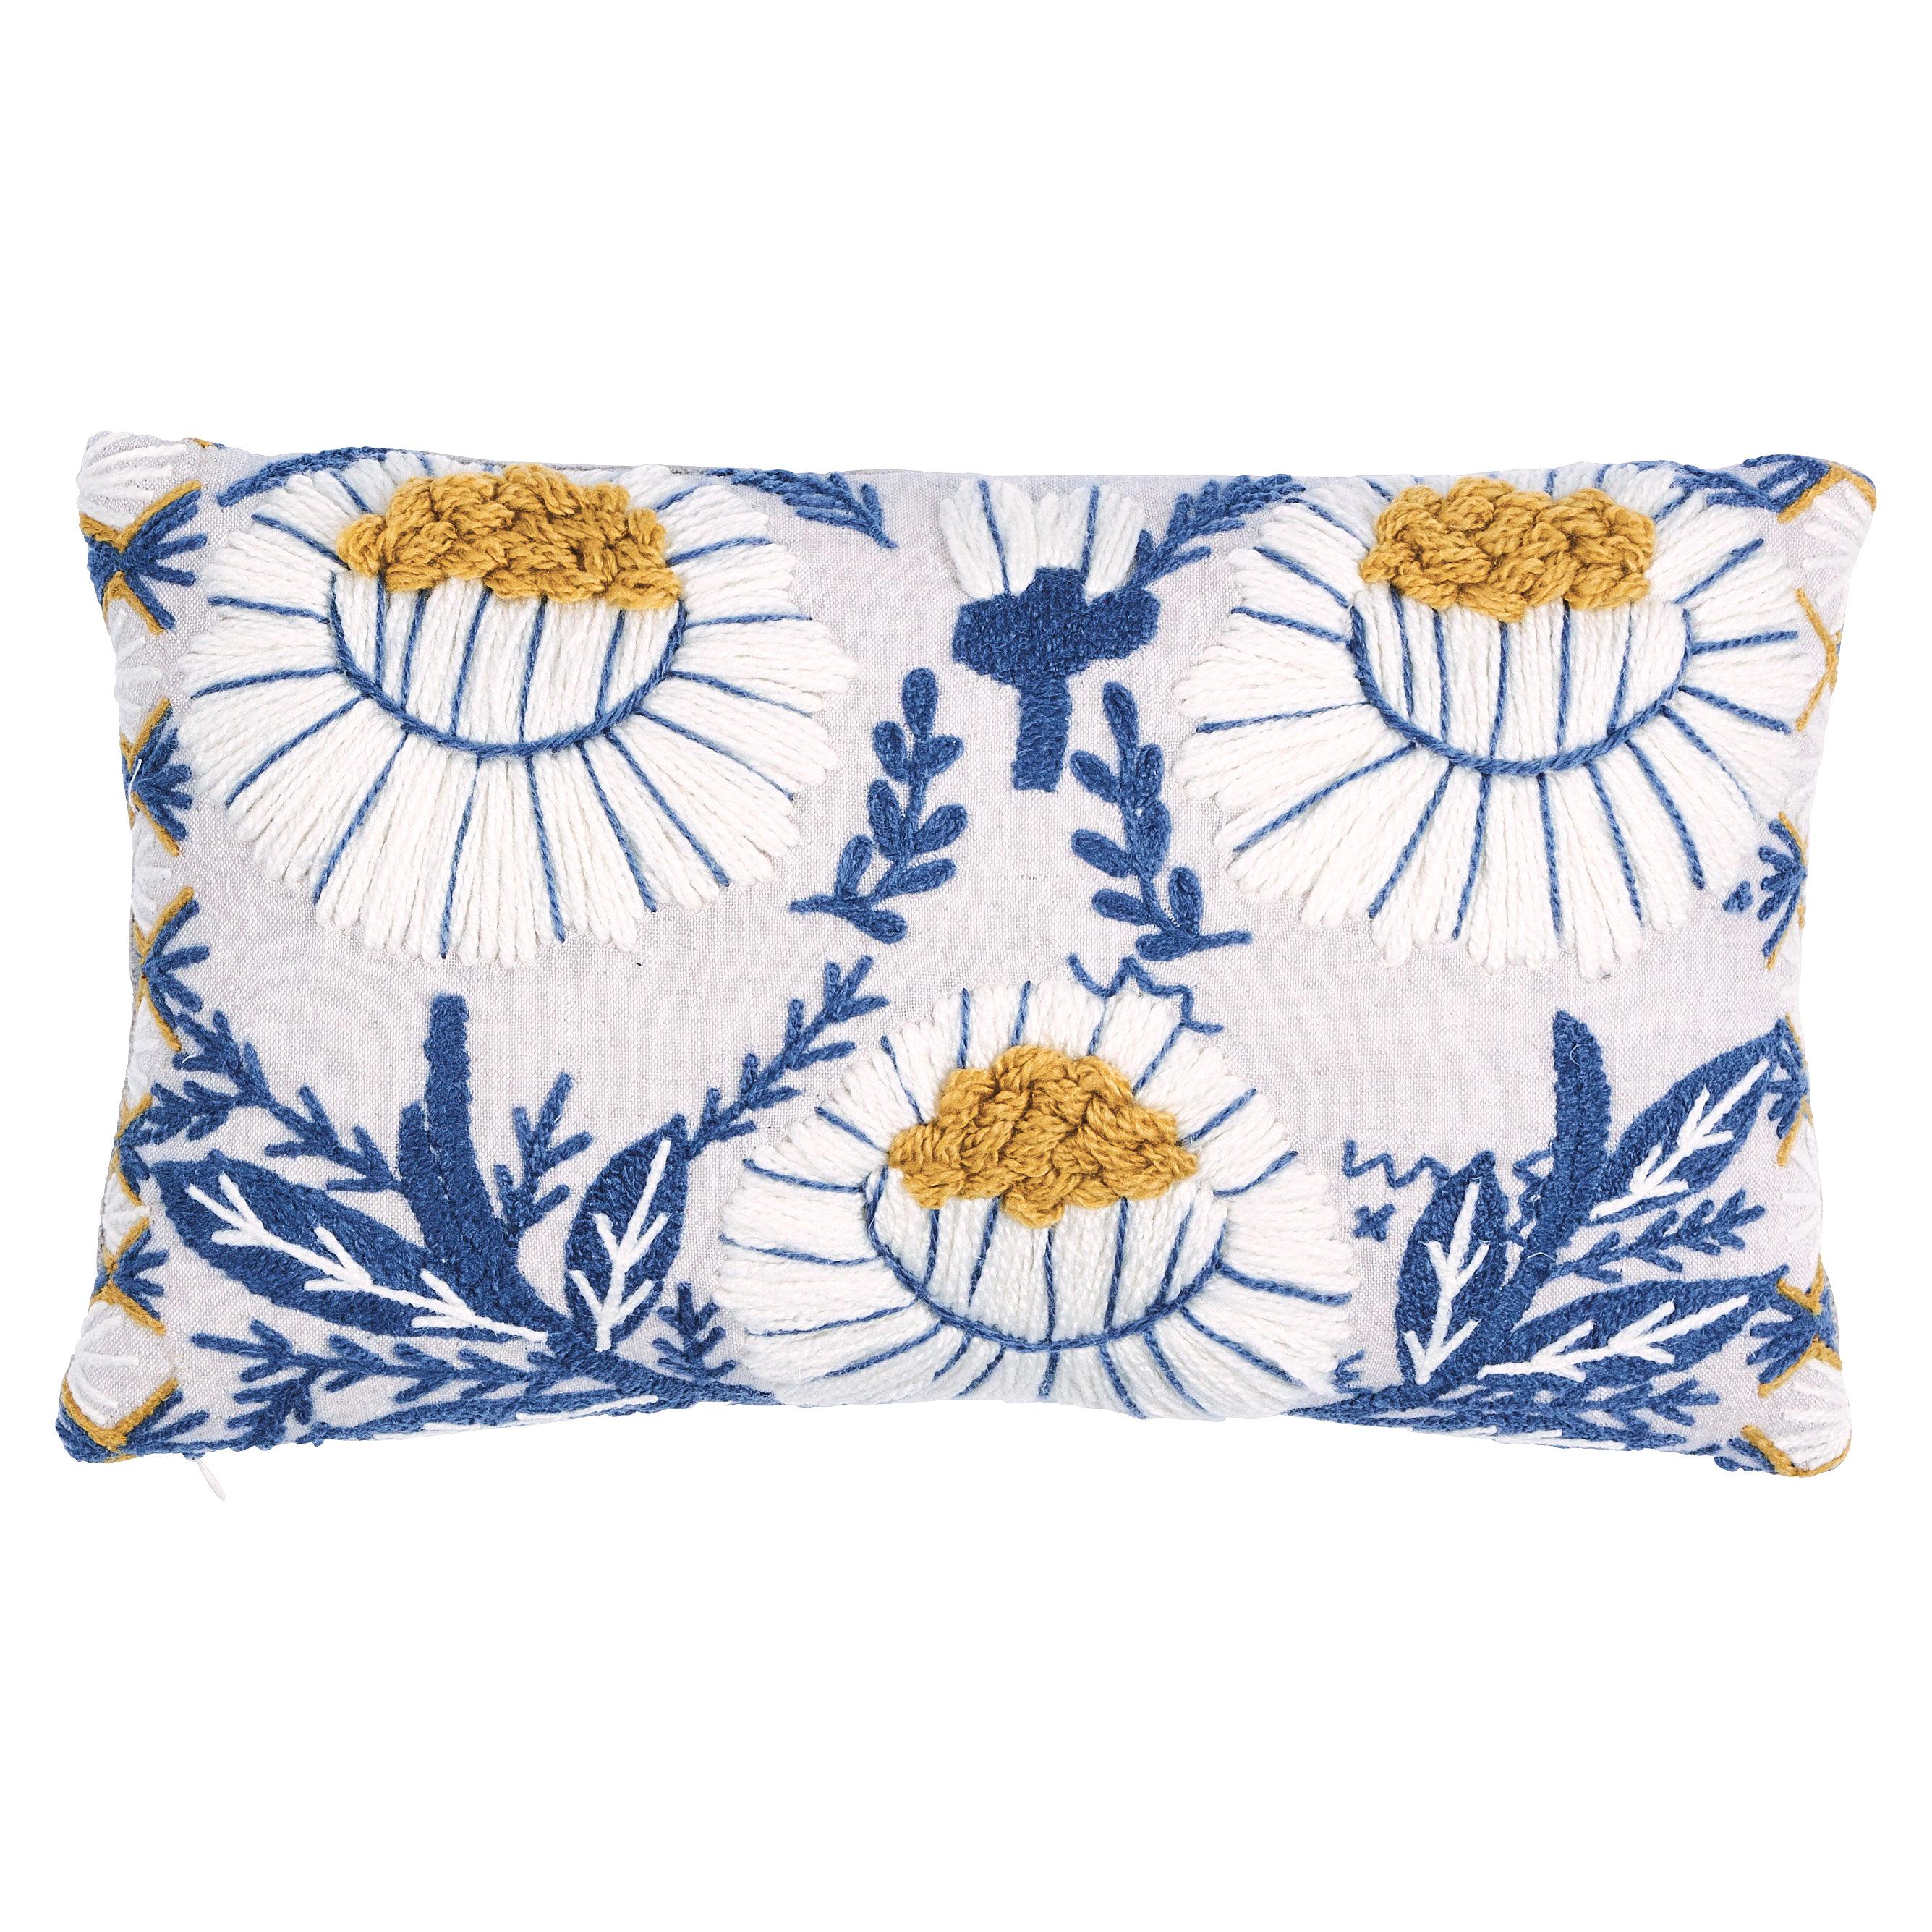 Schumacher Marguerite Embroidery Pillow in Blue & Ochre